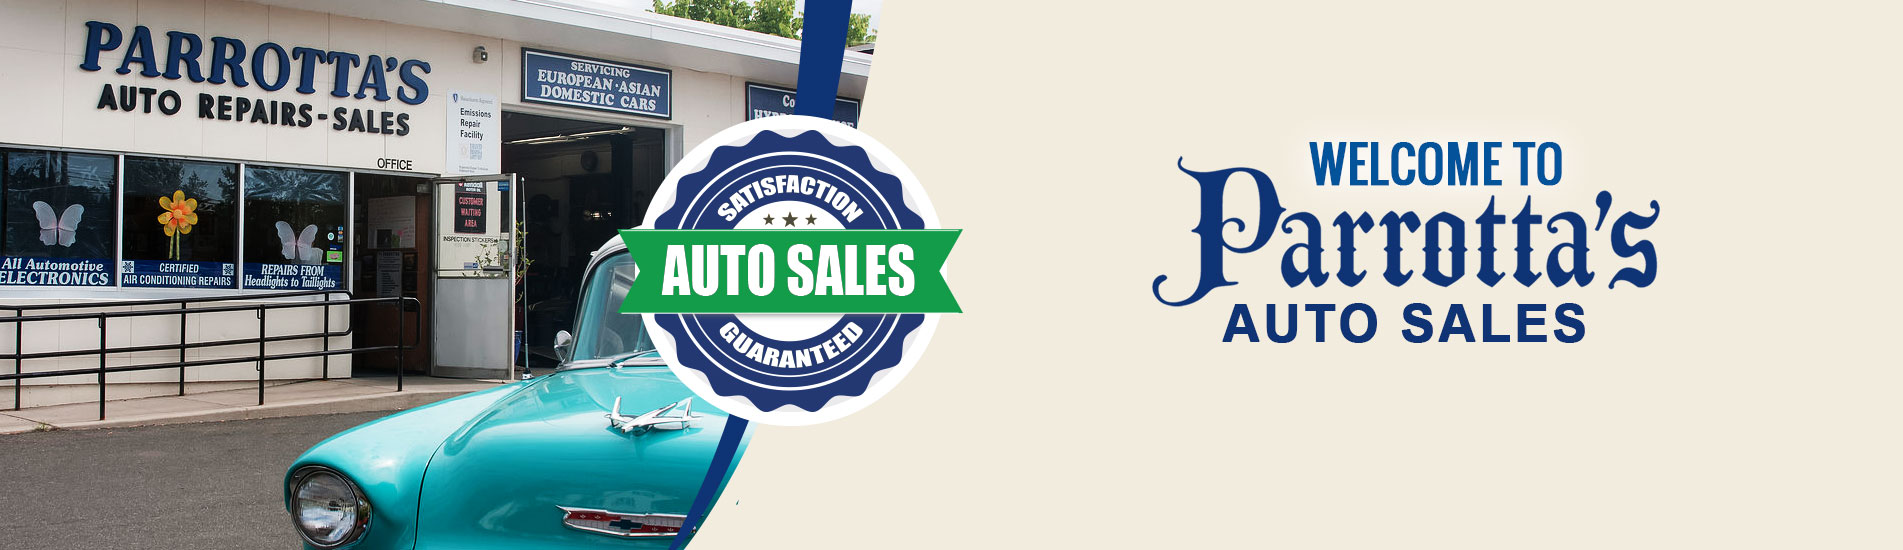 Welcome o Parrotta's Auto sales